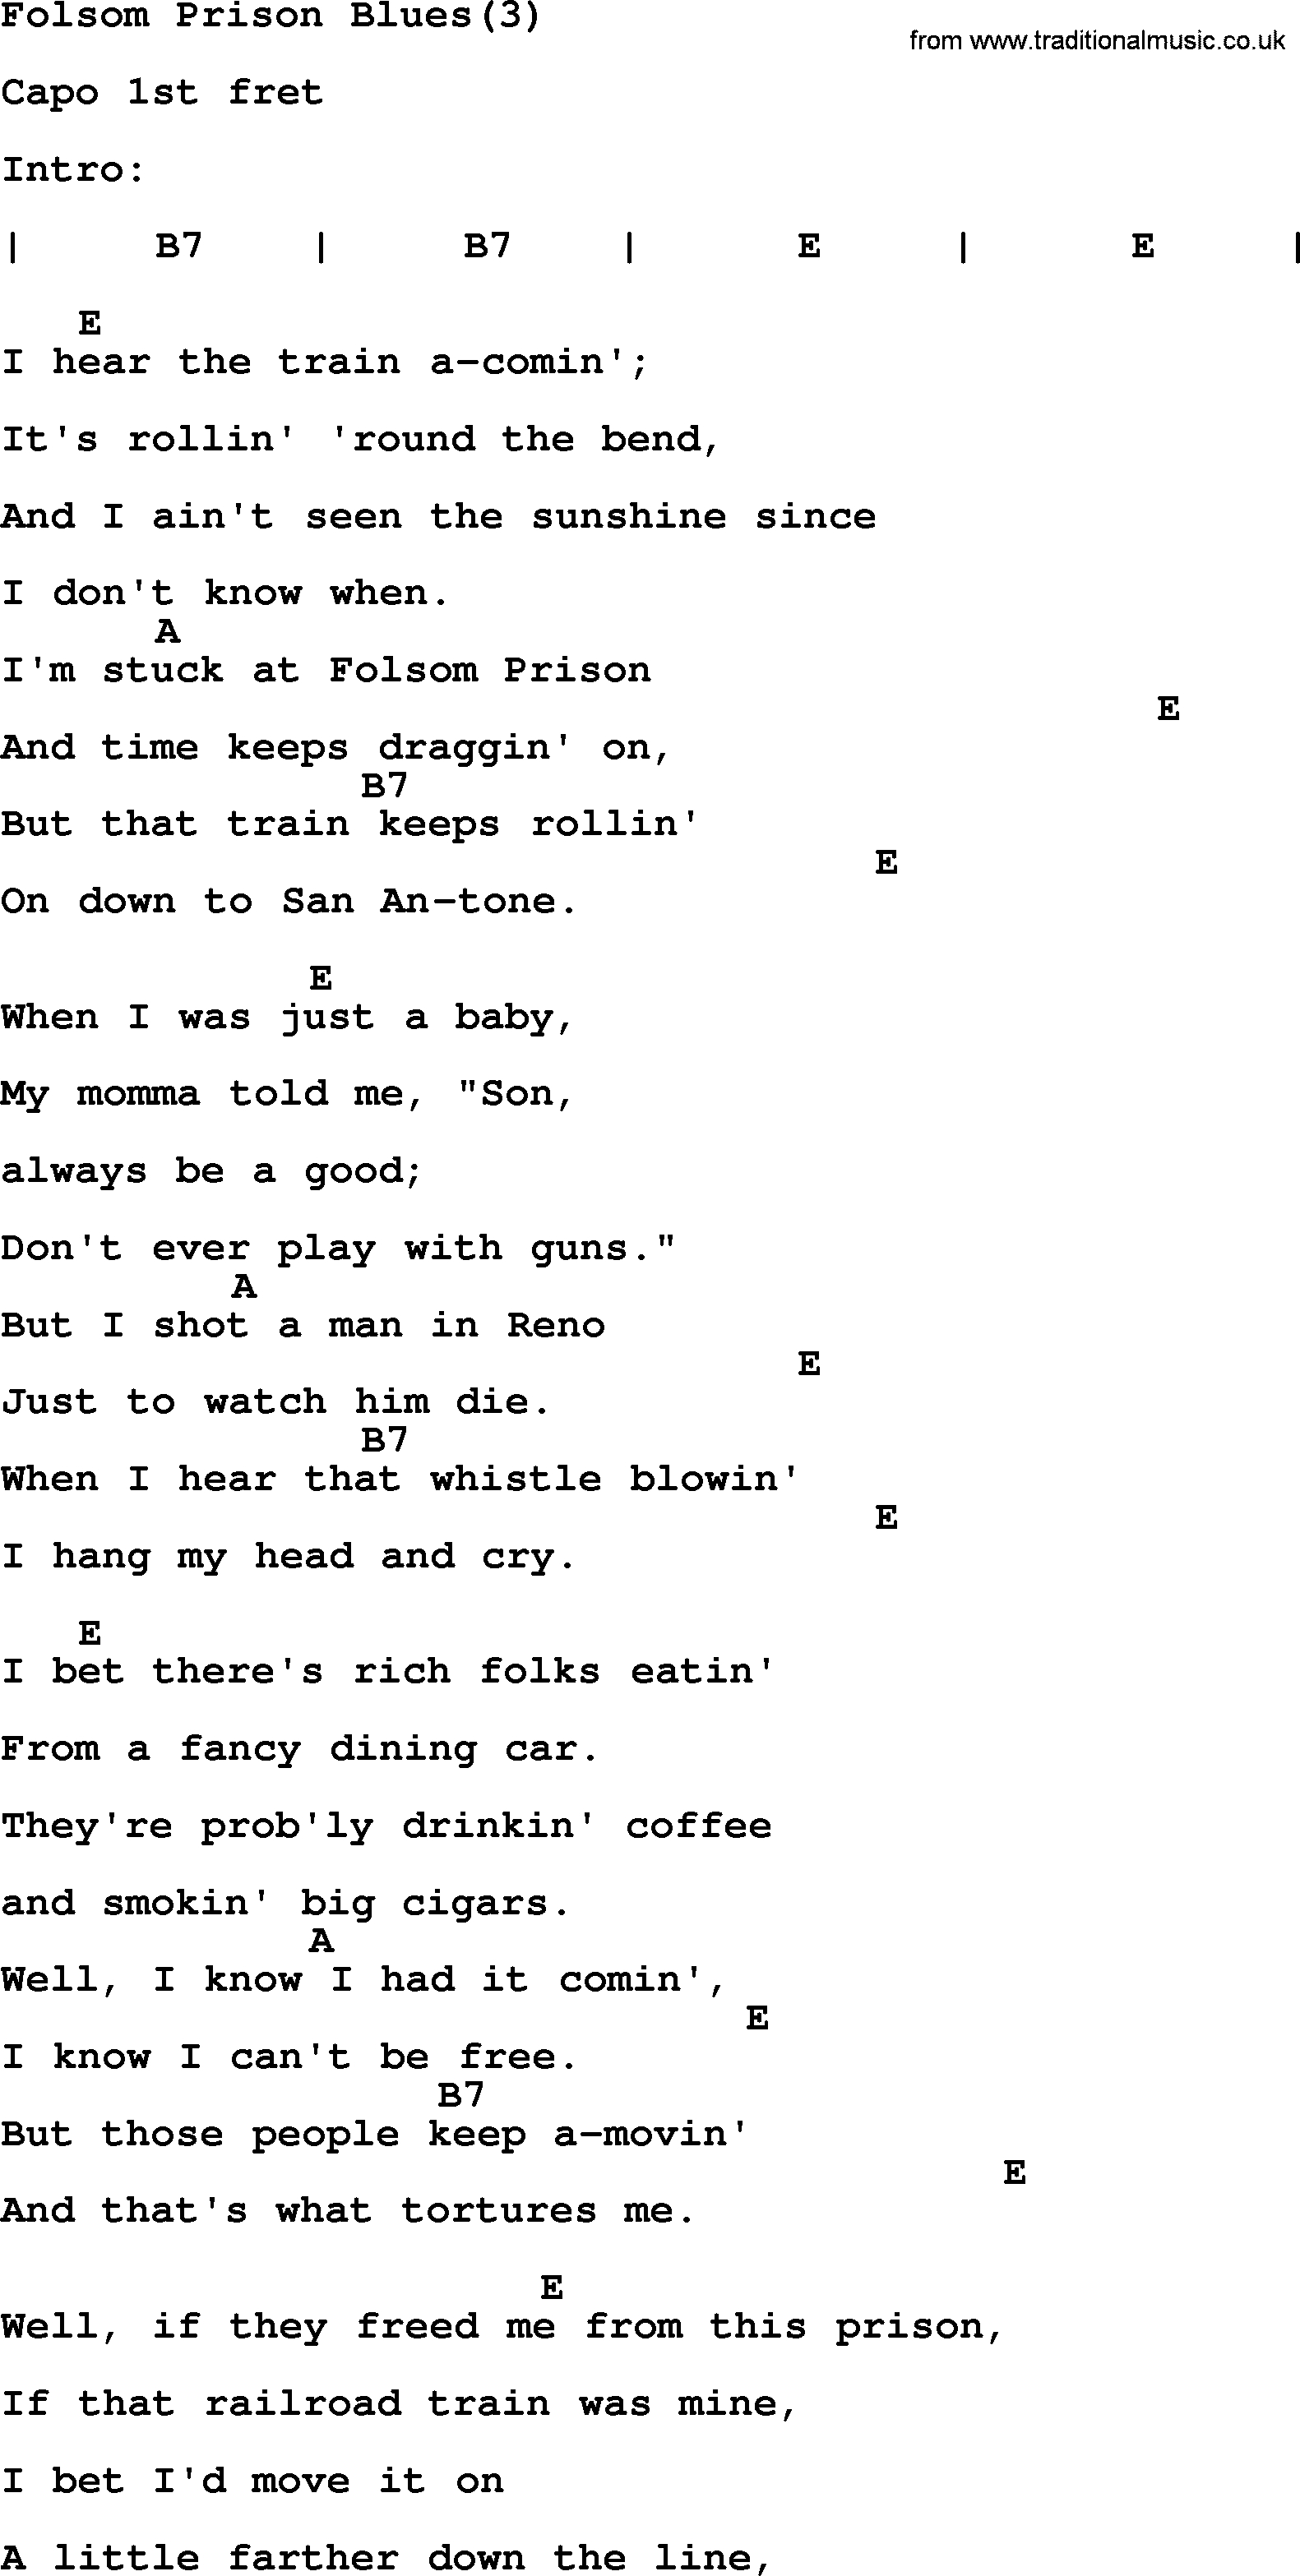 Folsom Prison Blues Chords Johnny Cash Song Folsom Prison Blues3 Lyrics And Chords